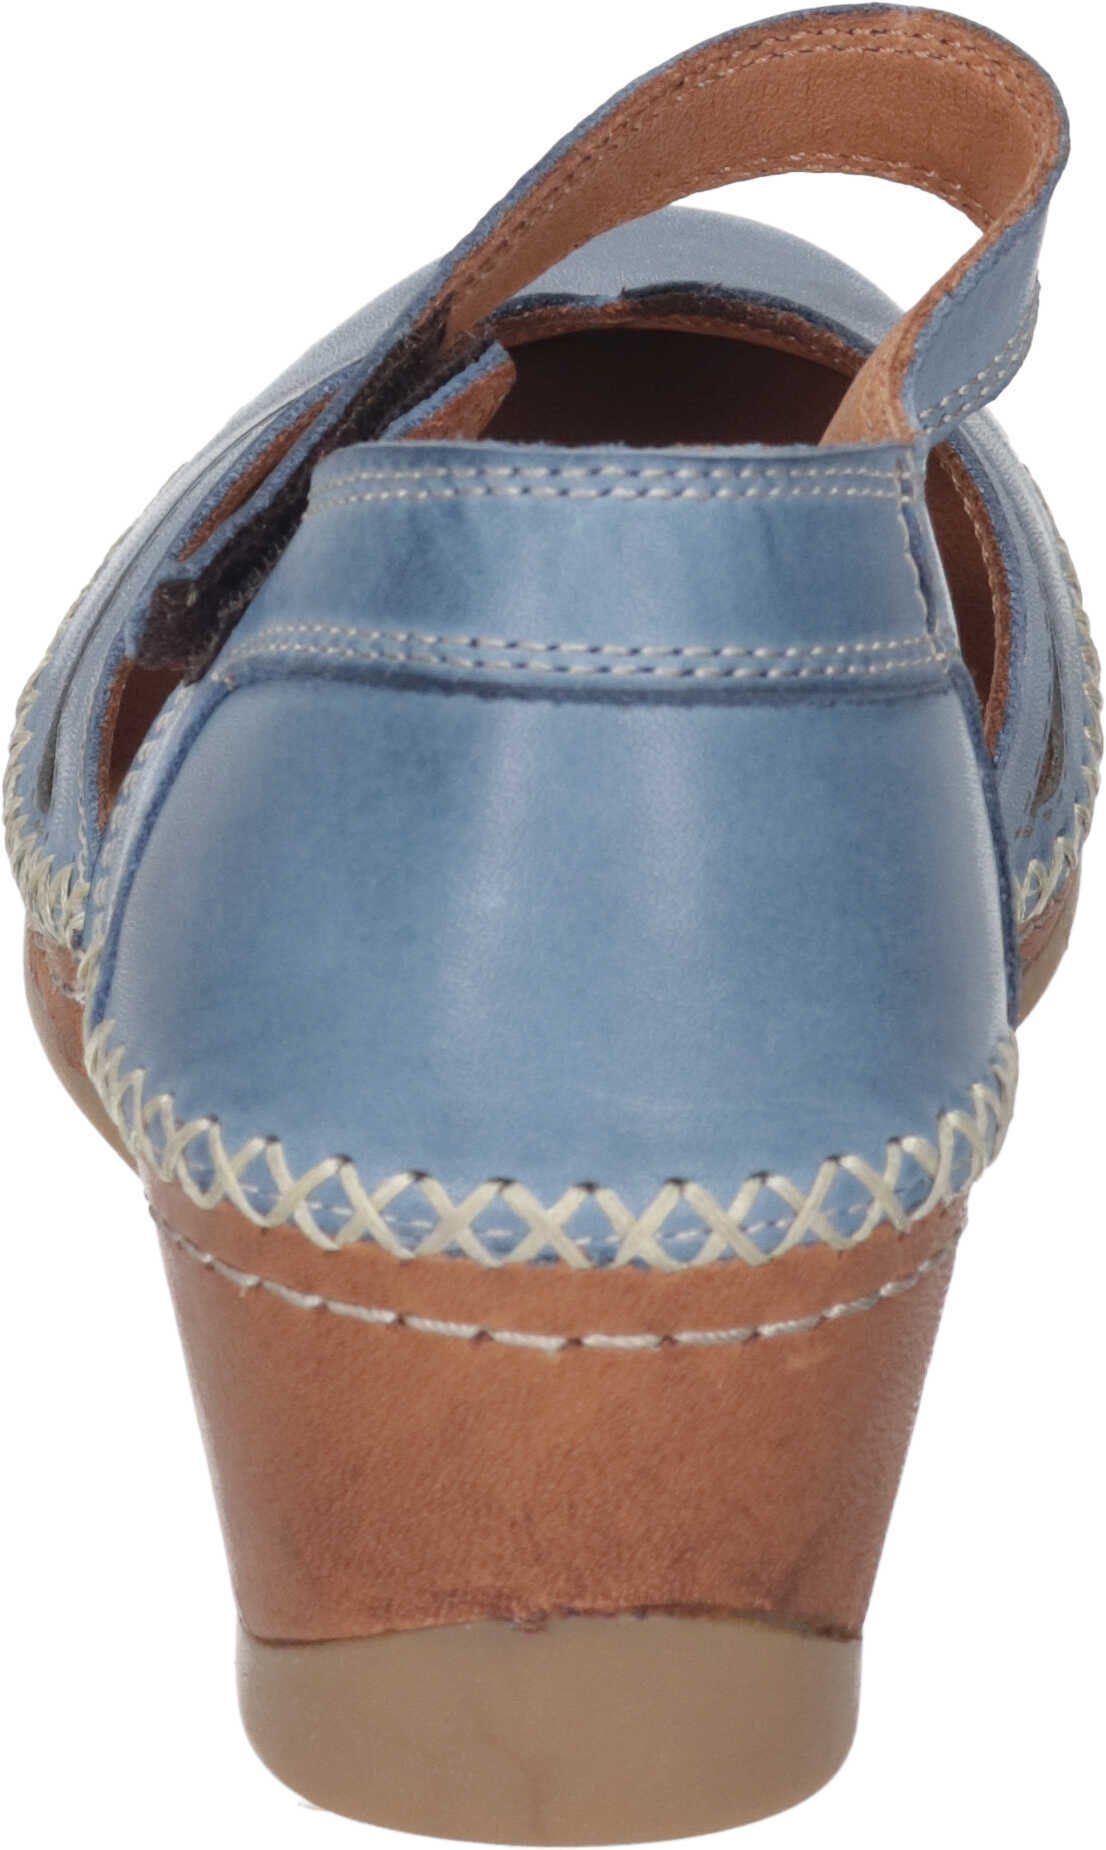 Leder Sandalette aus Manitu echtem Sandalen